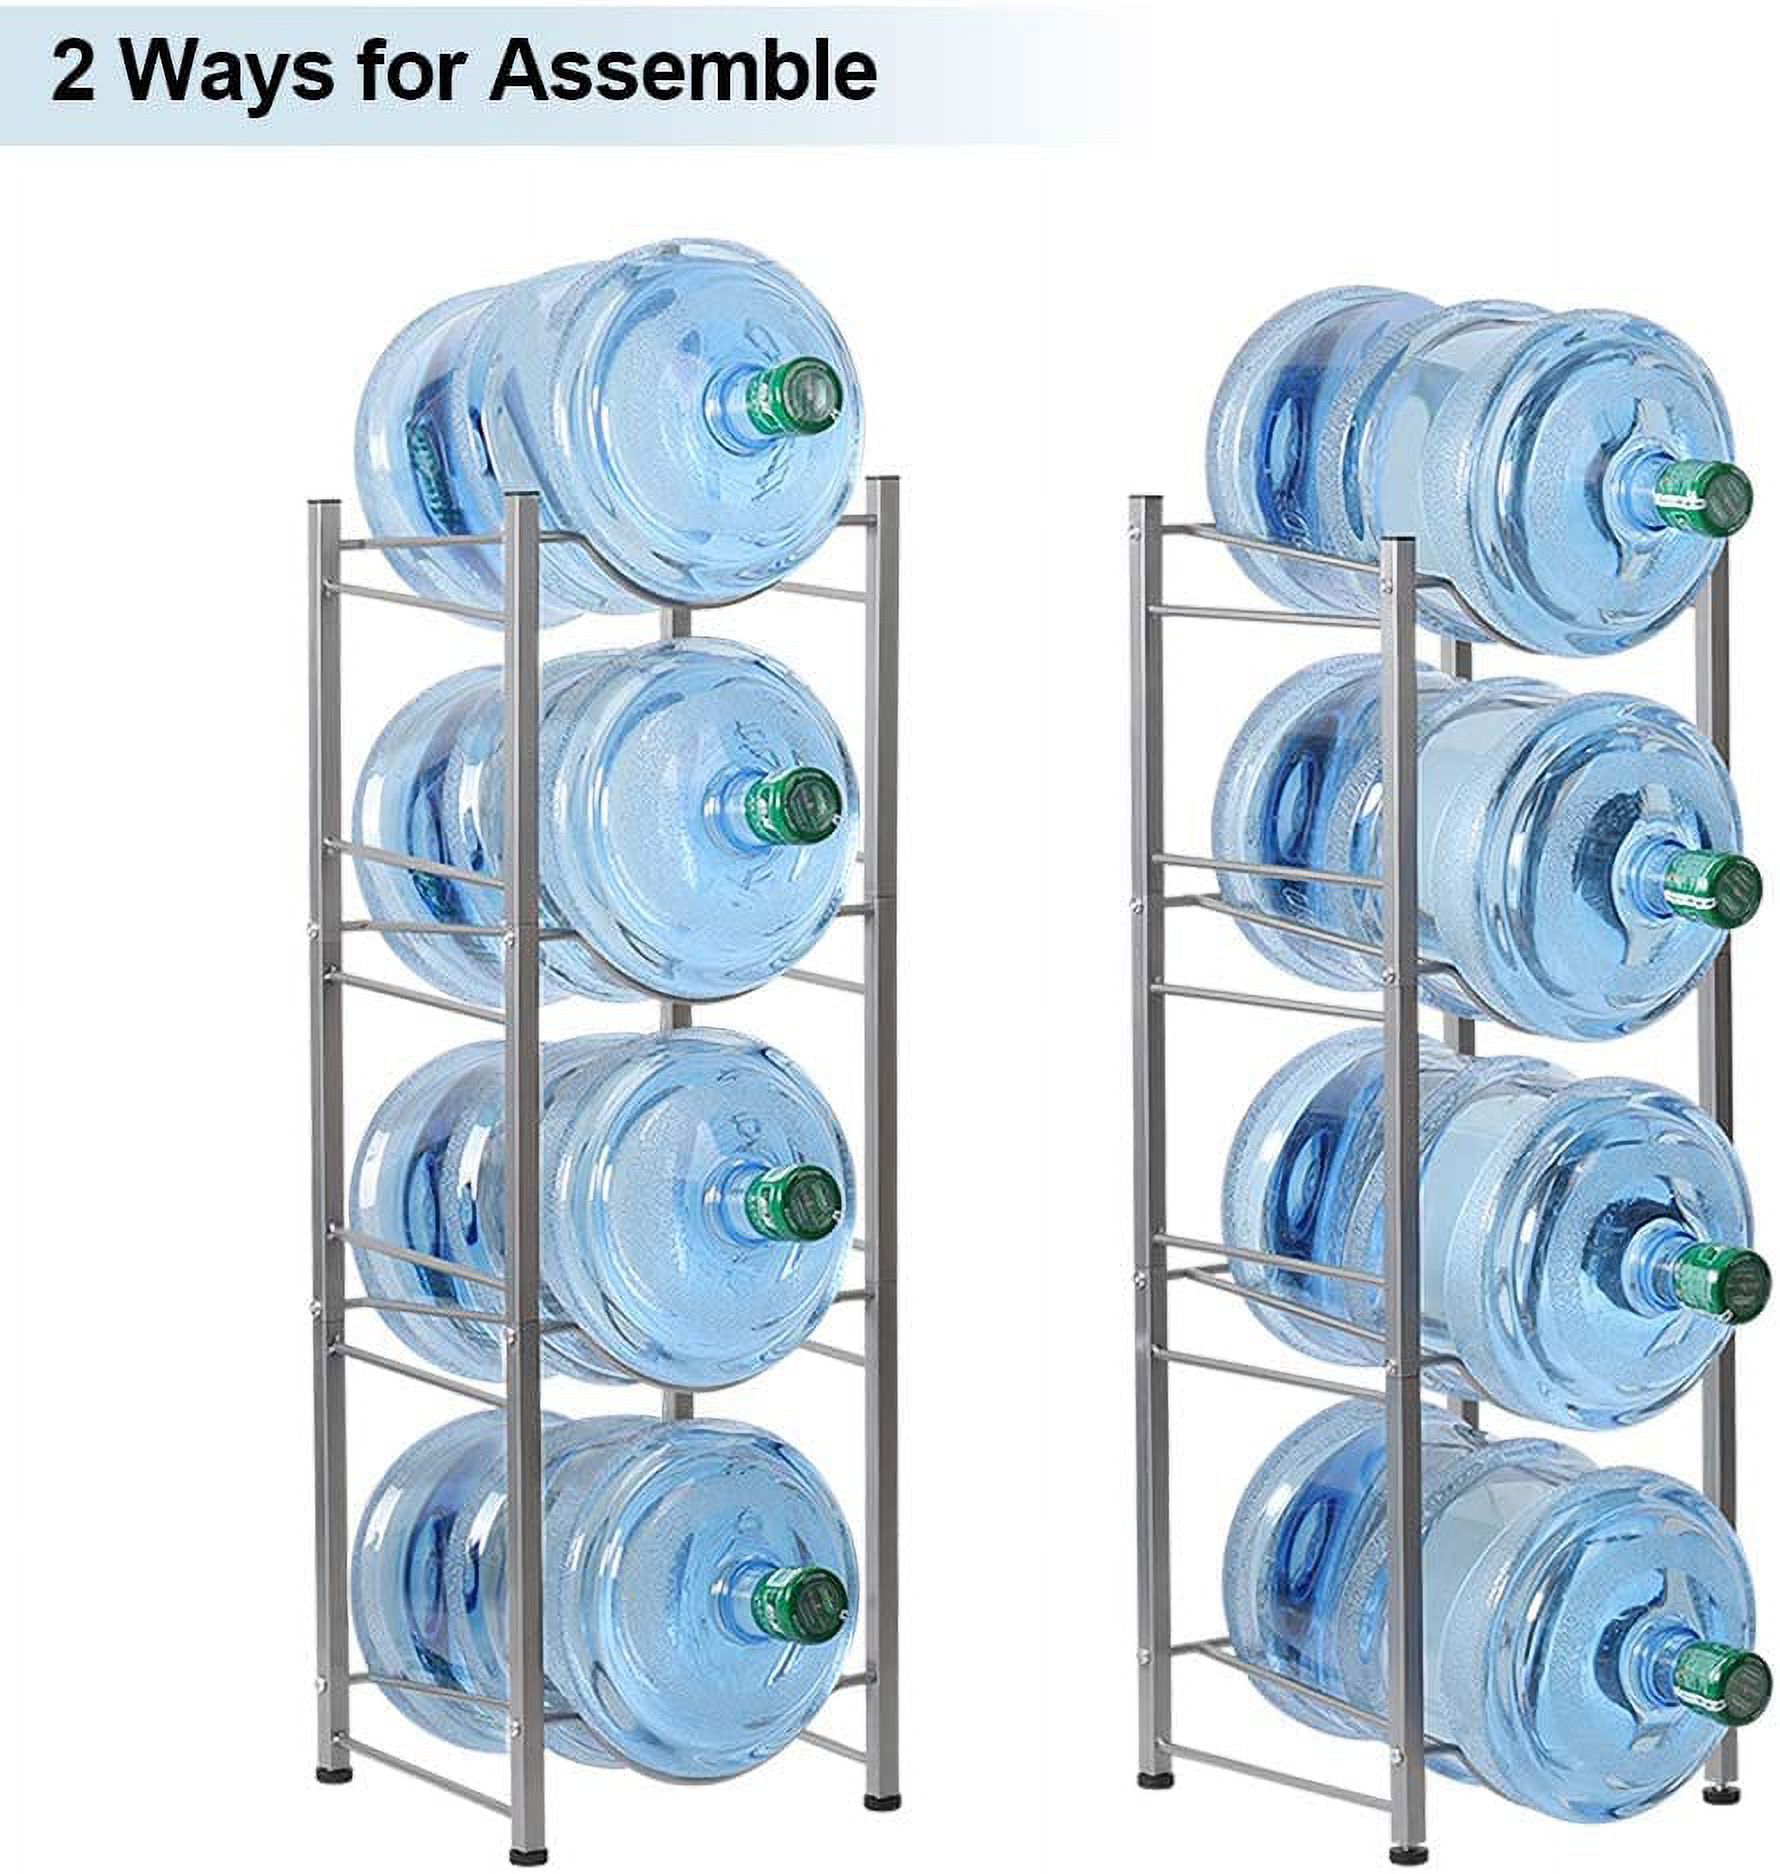 5 Gallon Water Jug Holder Water Bottle Storage Rack, 4 Tiers, Silver - image 3 of 7